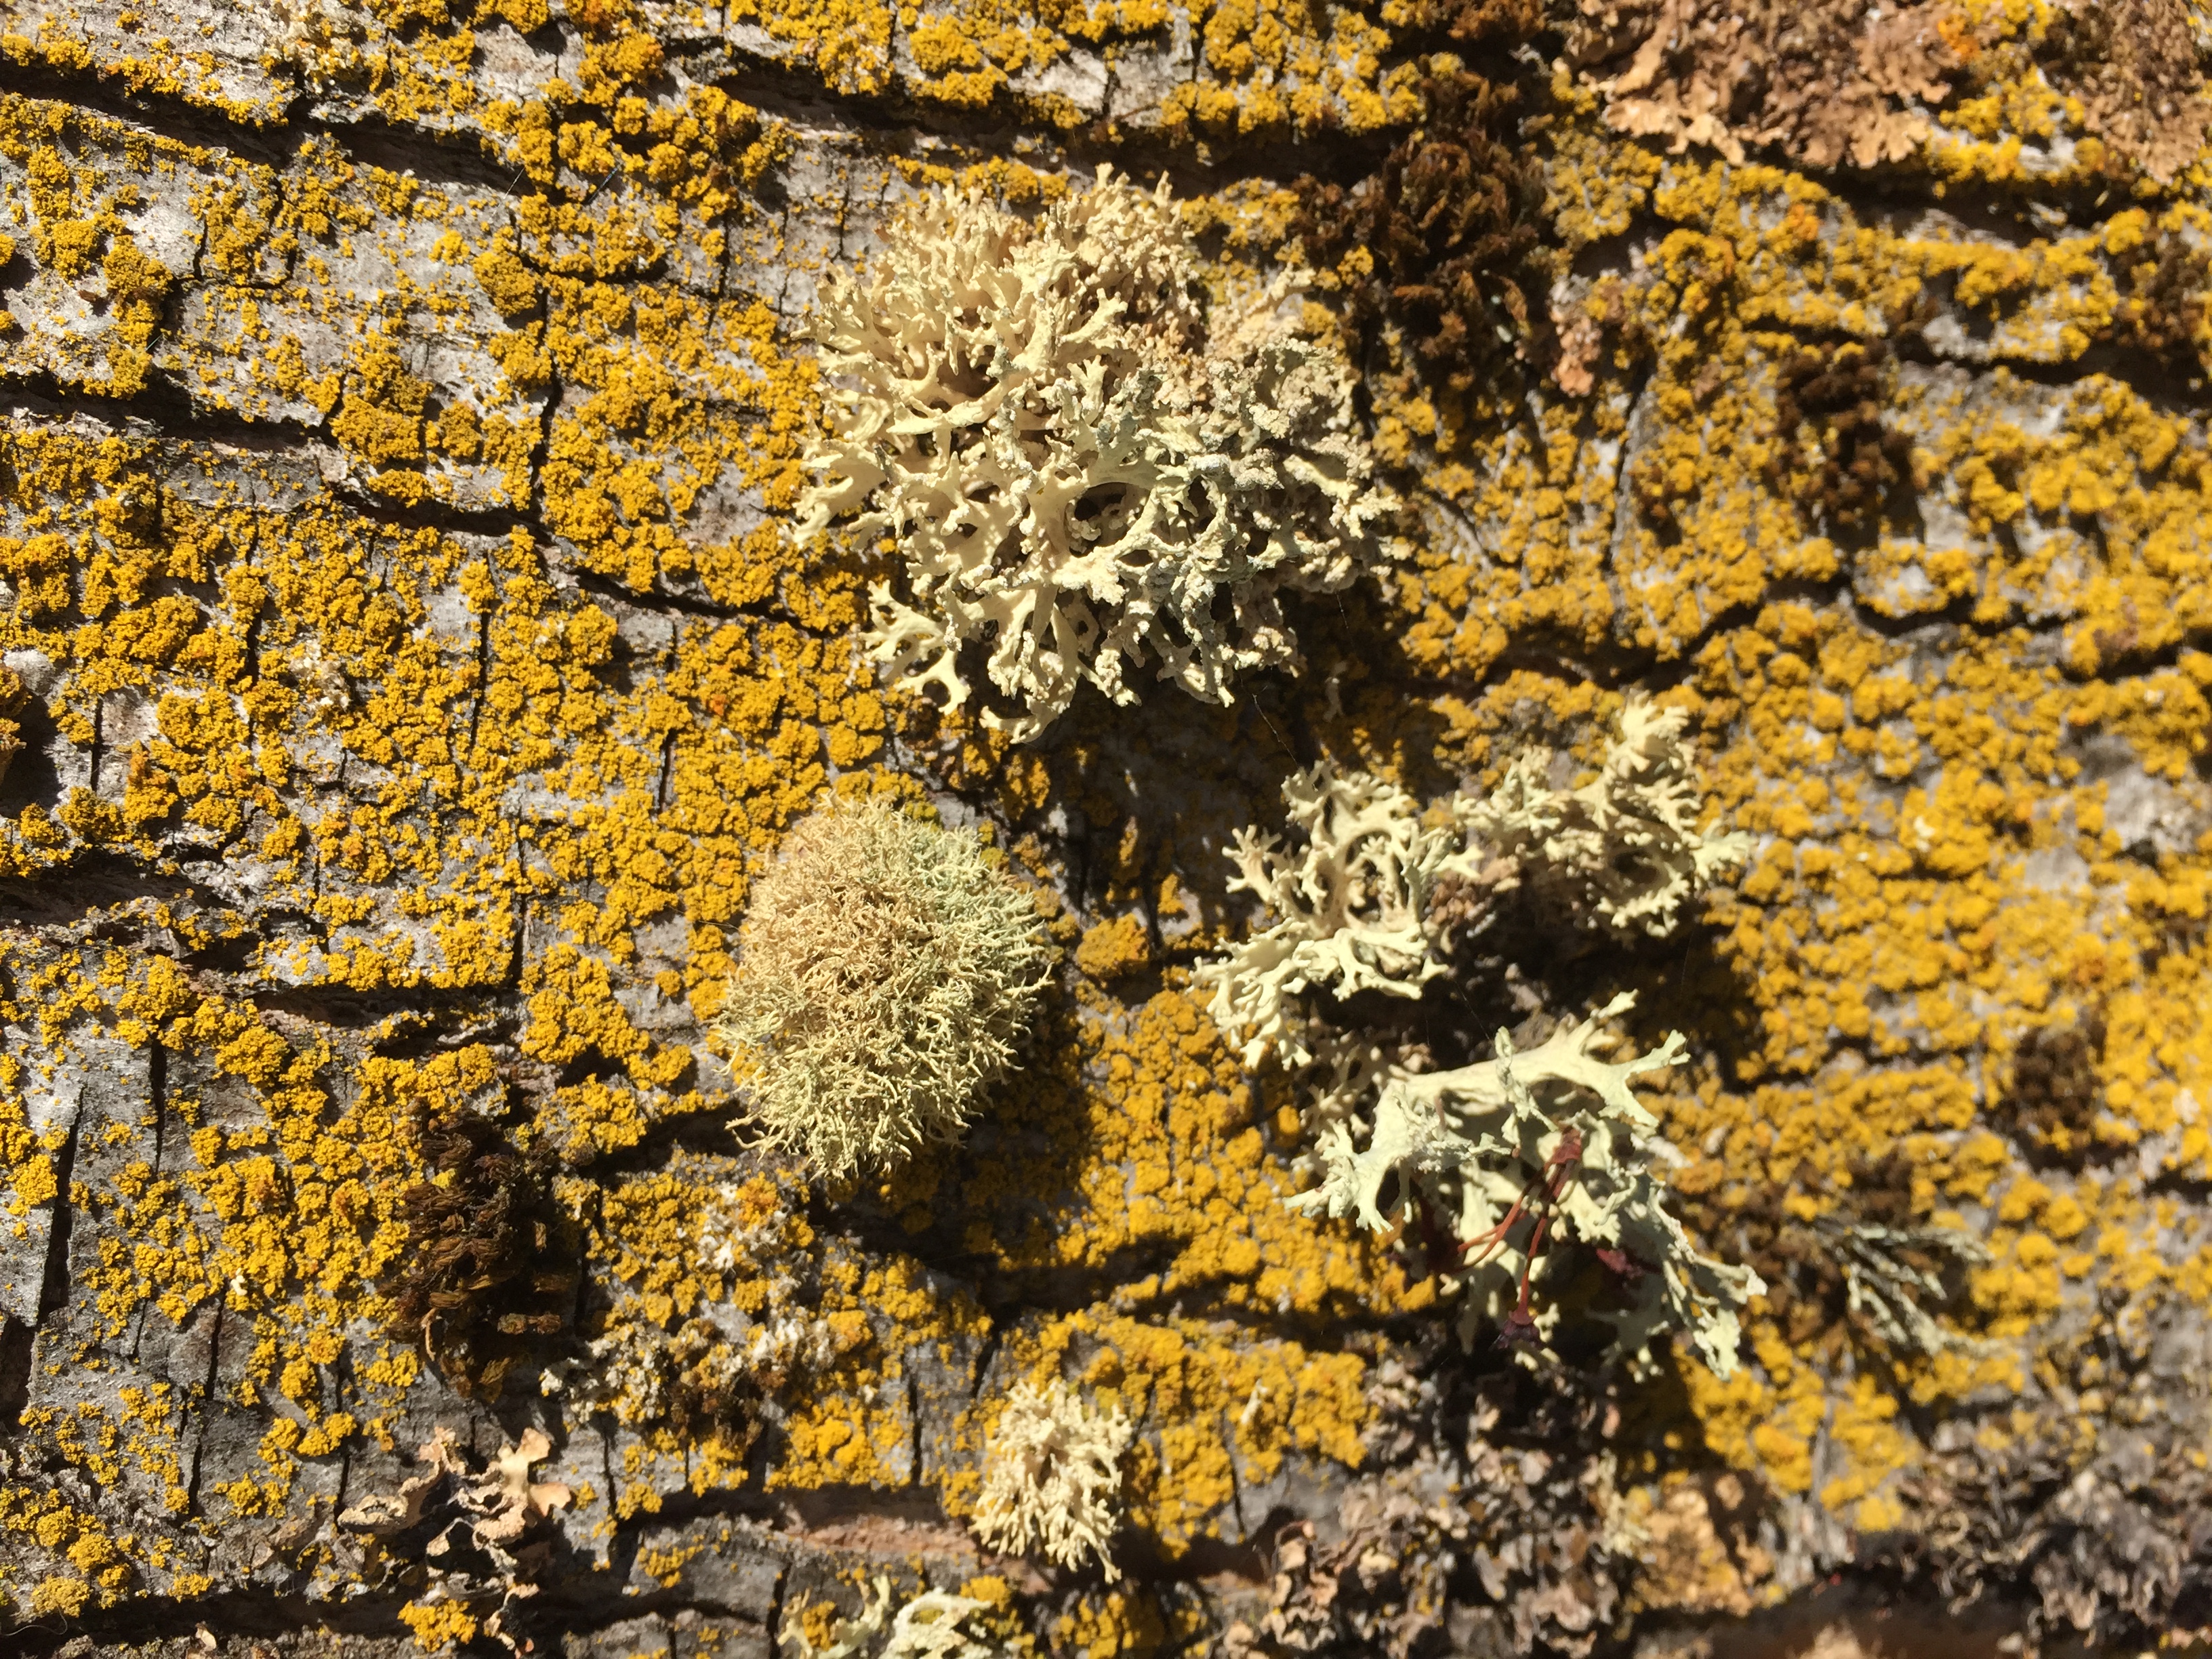 Photograph of Lichen by John Baldwin III in Woodburn, OR